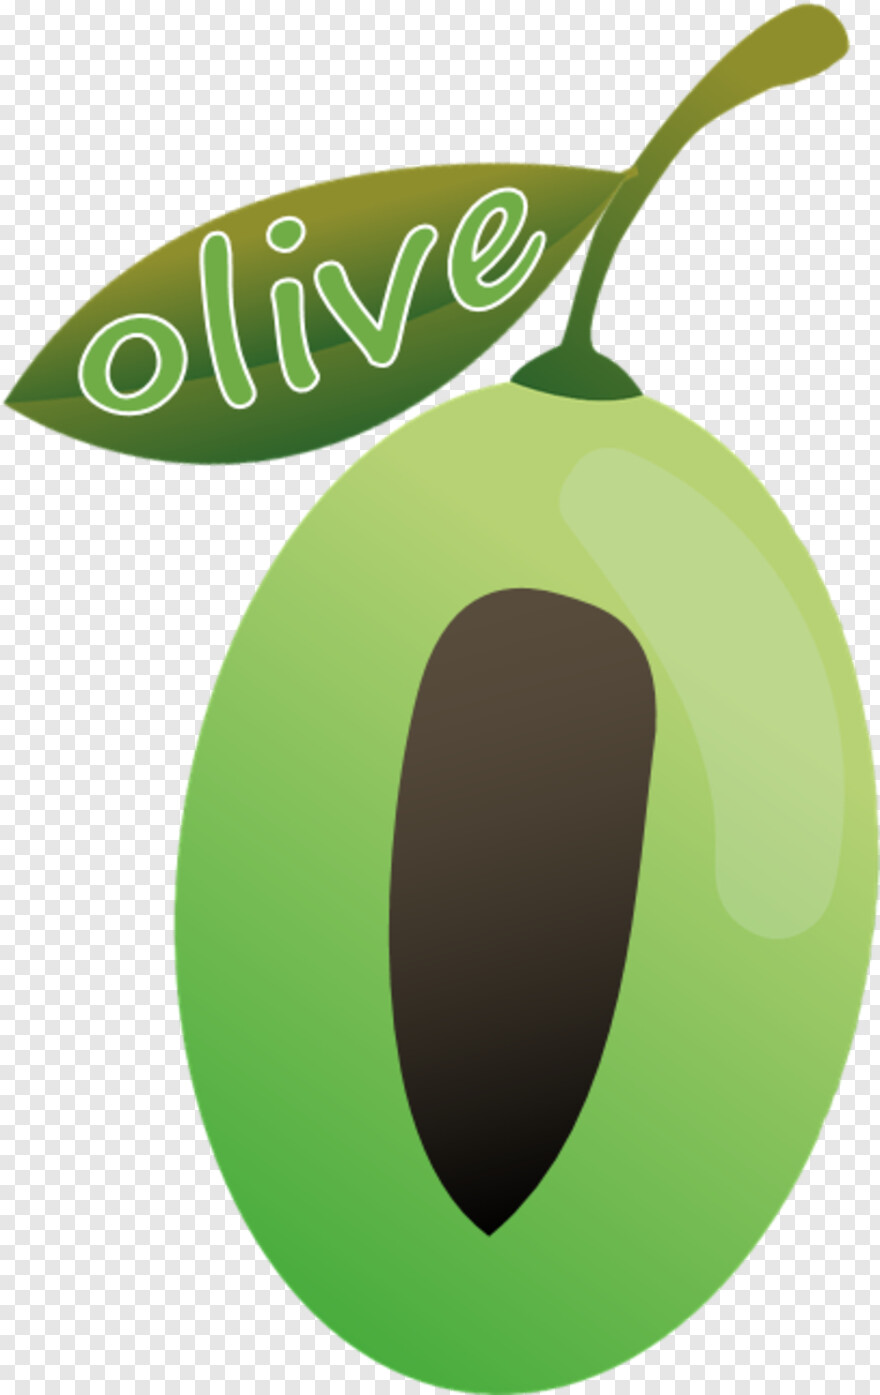 olive-oil # 670884